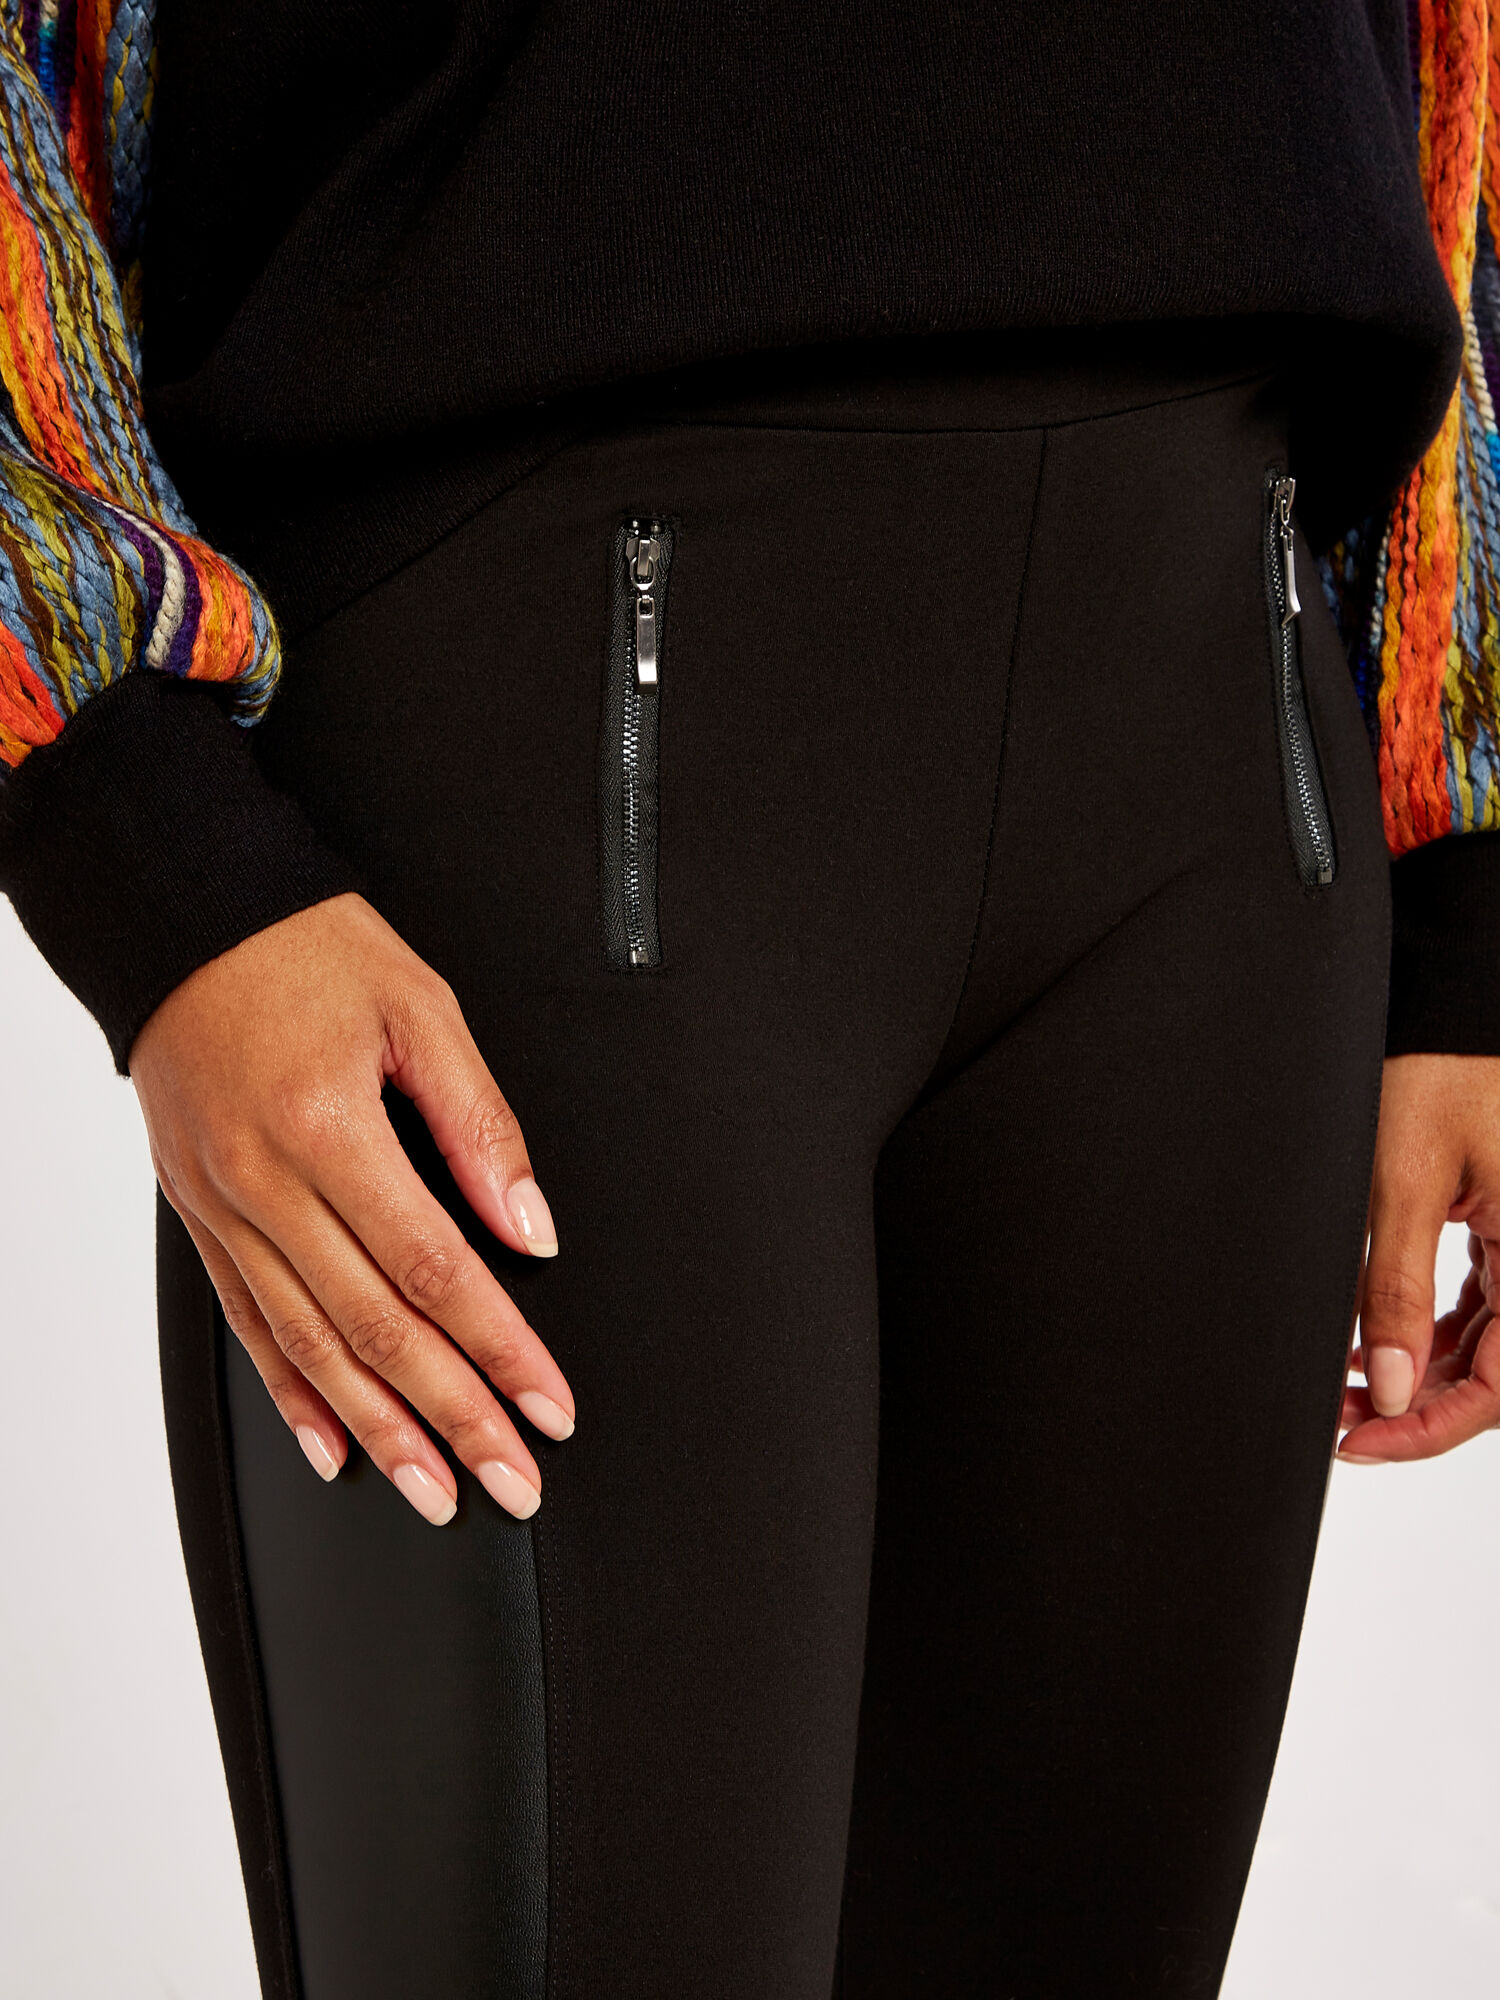 WOMENS LADIES LEATHER High Waist PU Leggings PVC Wet Look Stretch Trousers  Pants £21.23 - PicClick UK